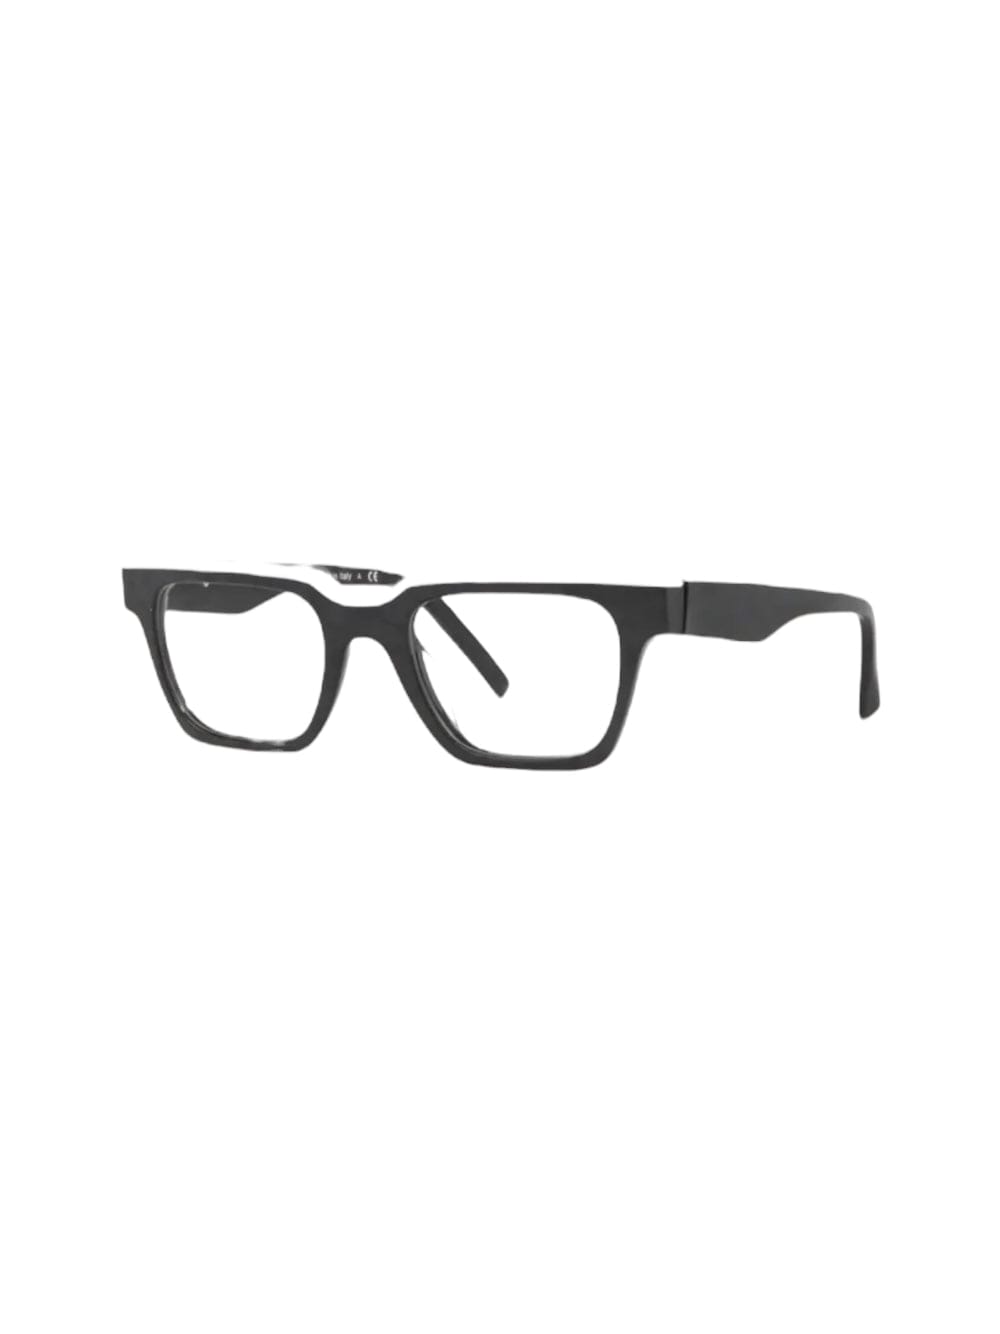 Alain Mikli Verney - A03093 - Black/white Glasses